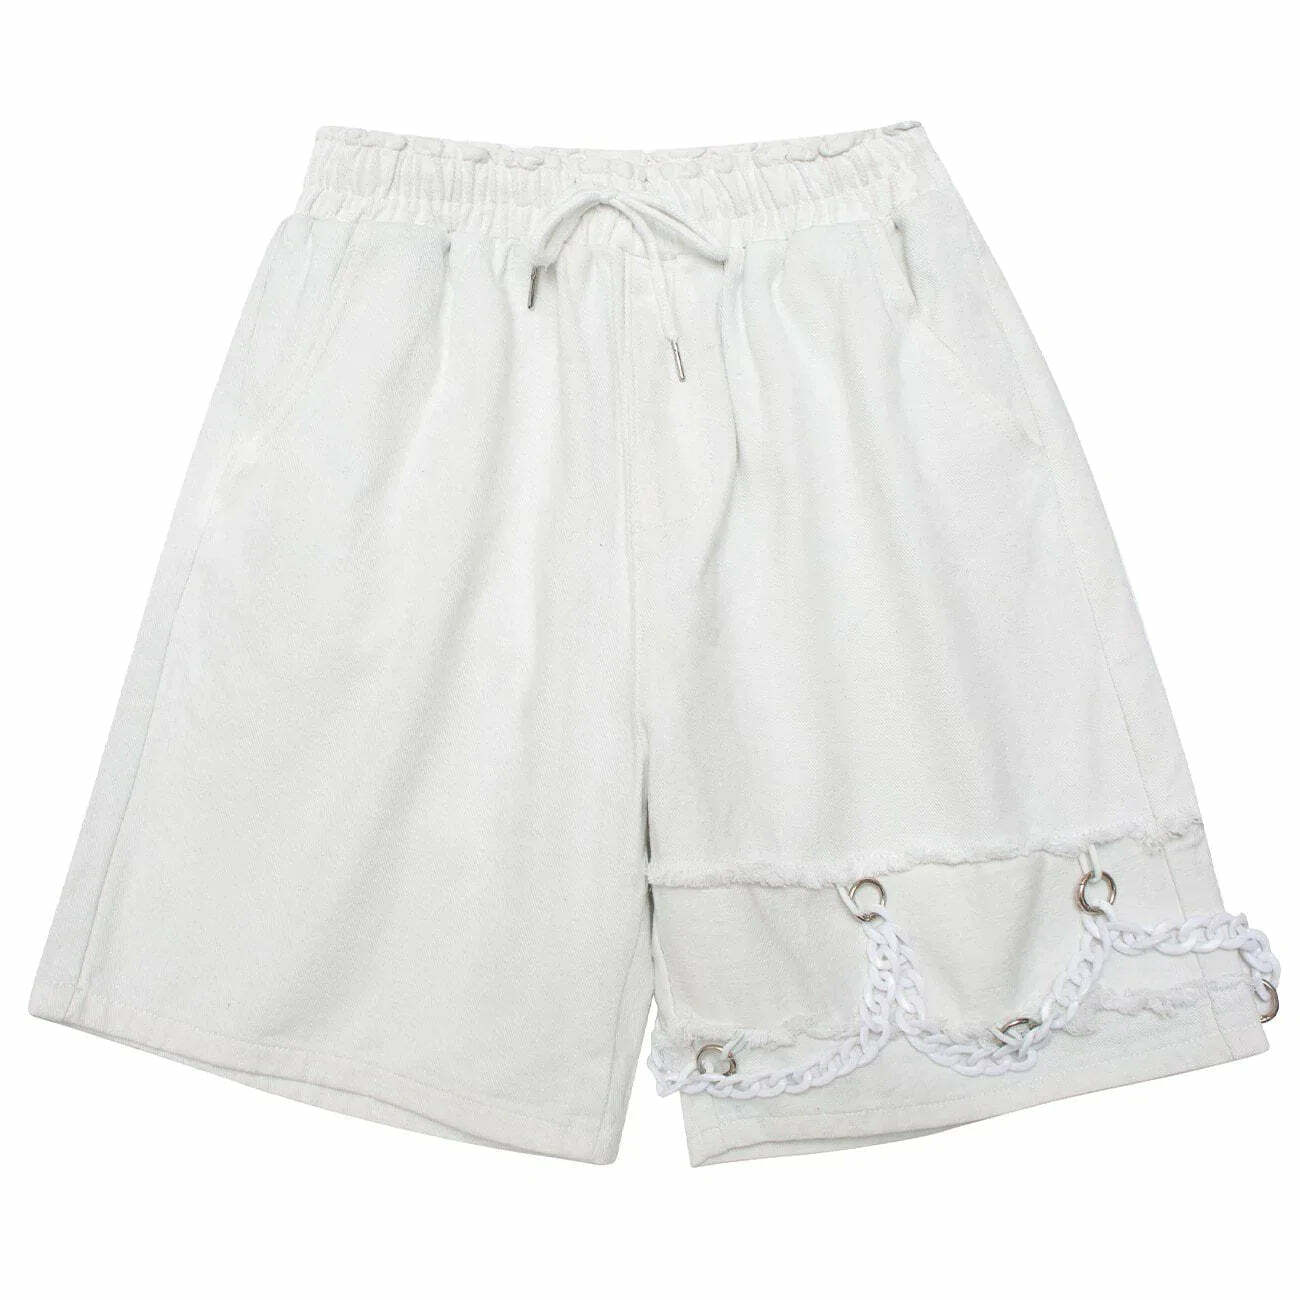 quirky chain vintage shorts retro y2k streetwear 4816